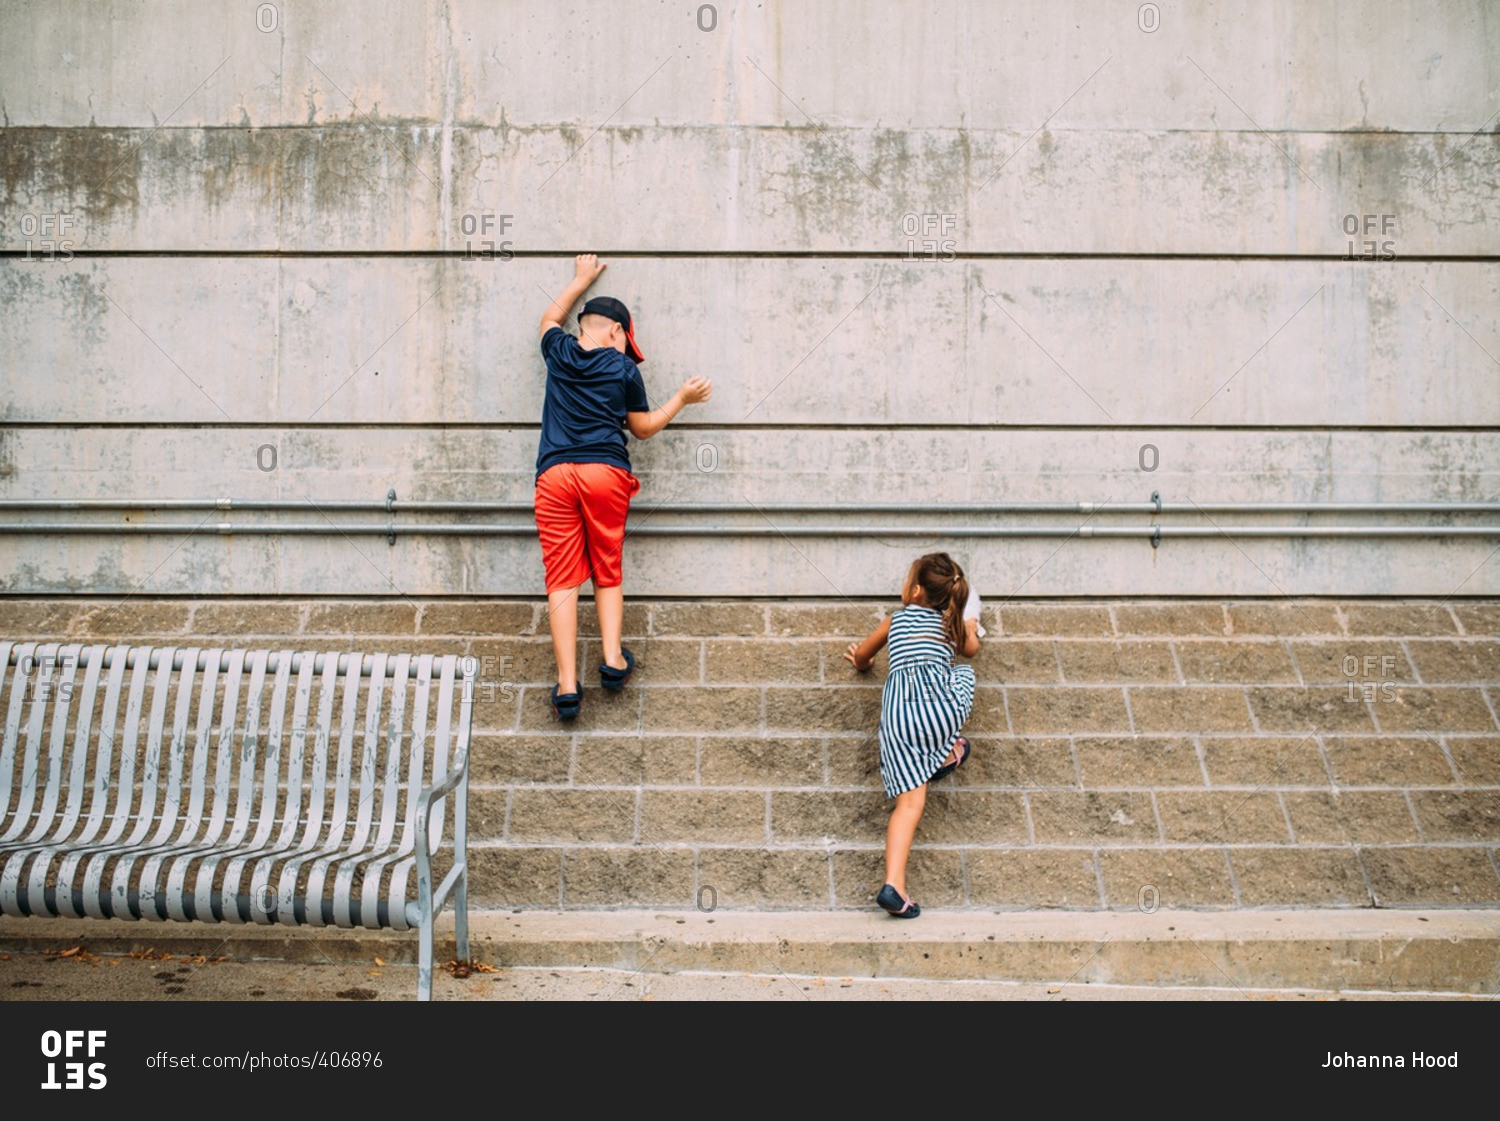 Kids scaling a wall - Offset stock photo - OFFSET